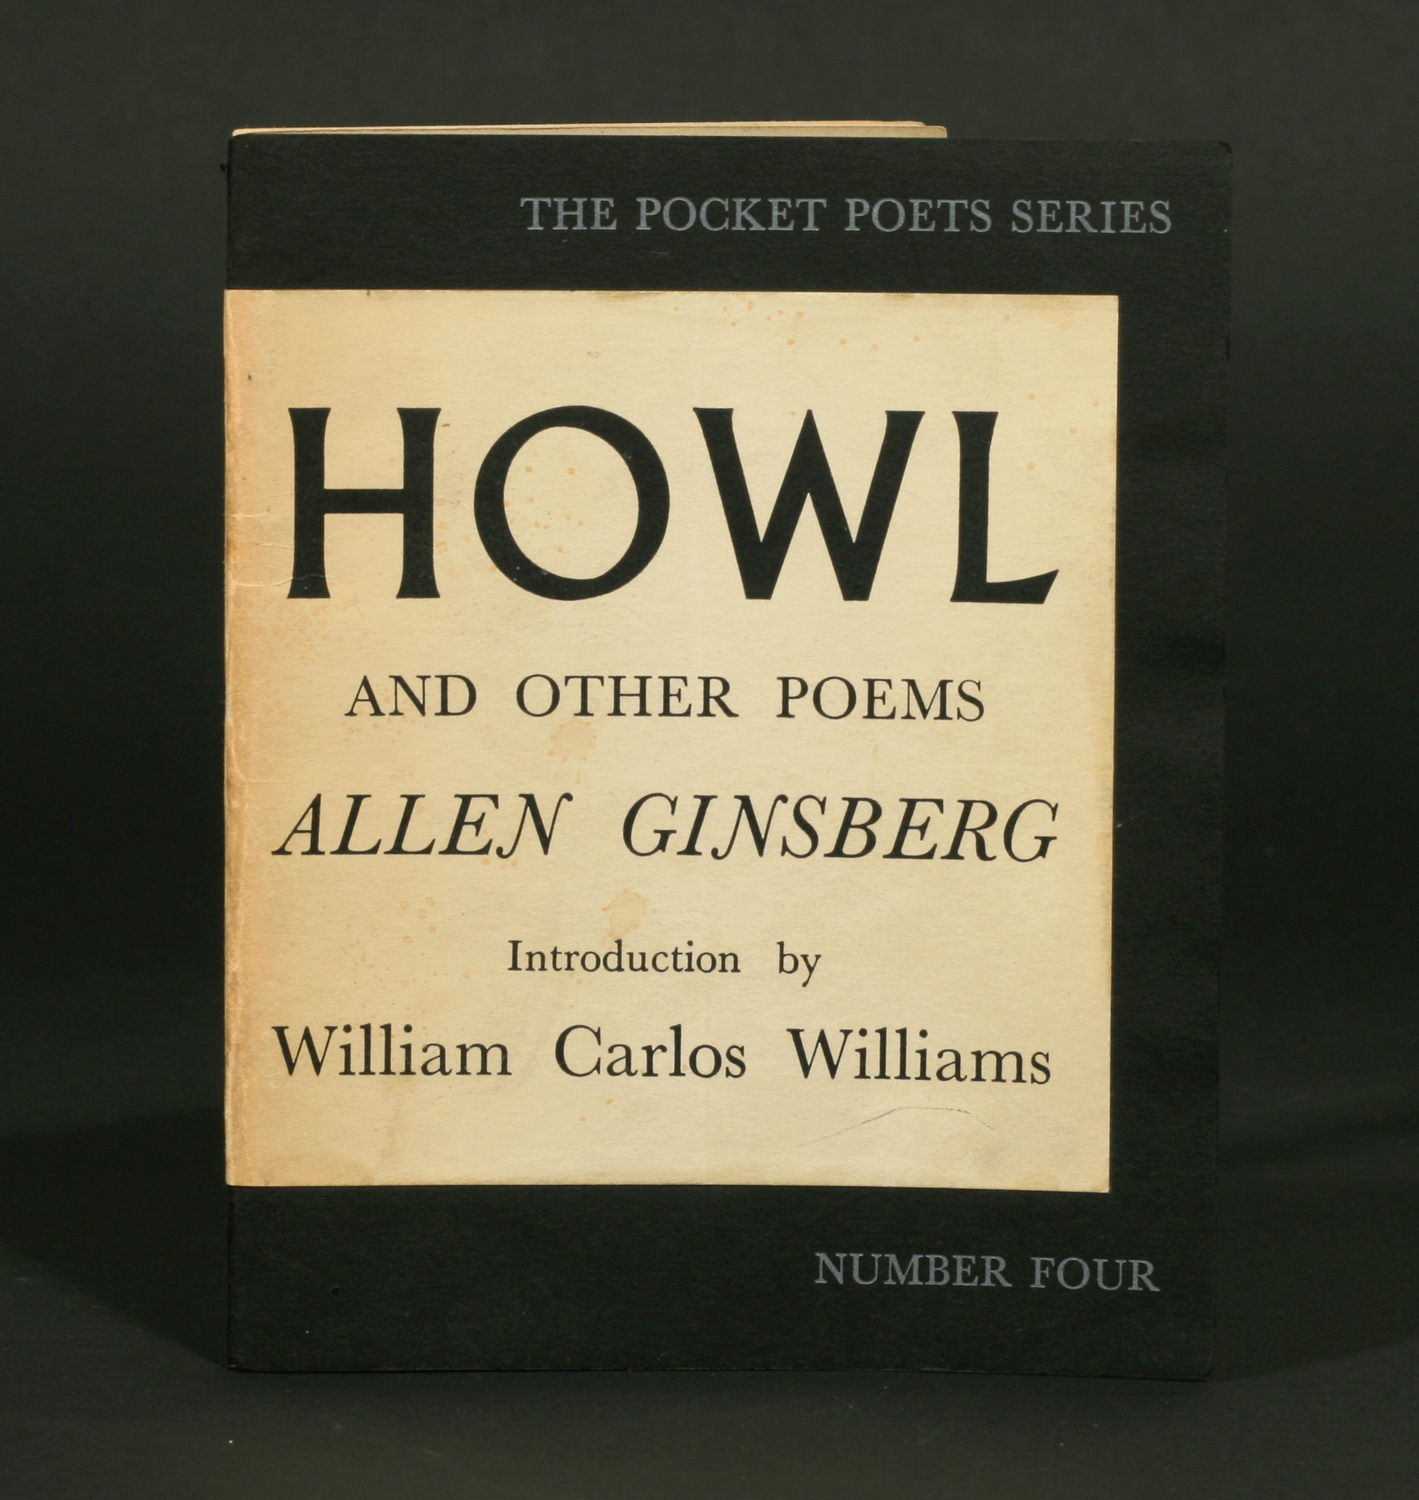 Аллен гинзберг вопль. Гинзберг вопль книга. Поэма вопль Аллена Гинзберга. Howl and other poems книга.